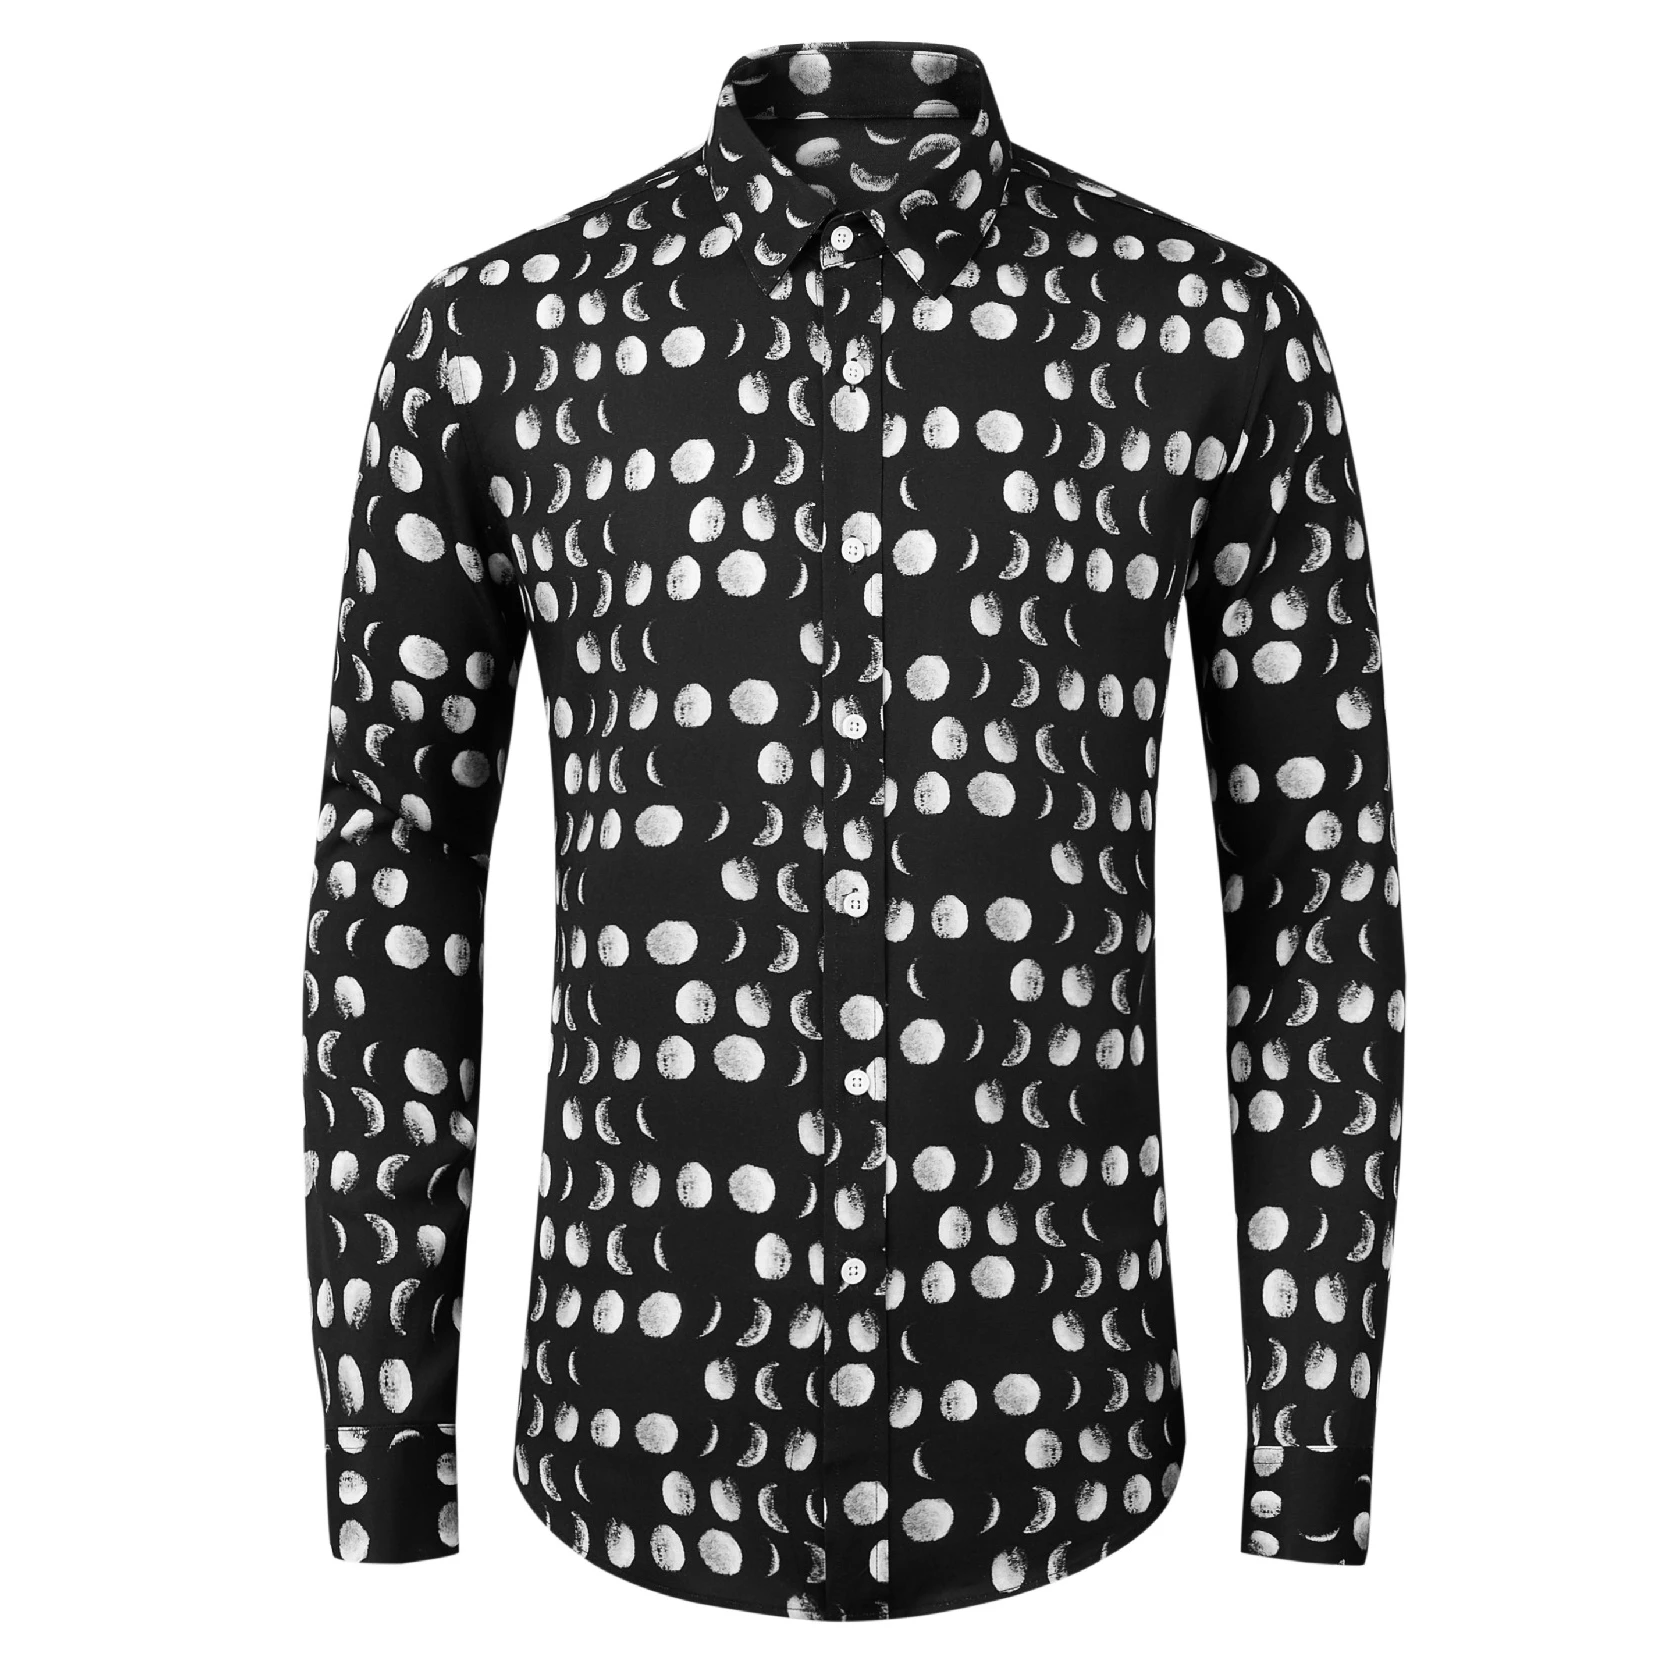 

Lunar Polka Dot Printed Men's Shirt Luxury Brand Long Sleeve Casual Shirts Slim Fit Business Social Party Tuxedo Dress Shirts